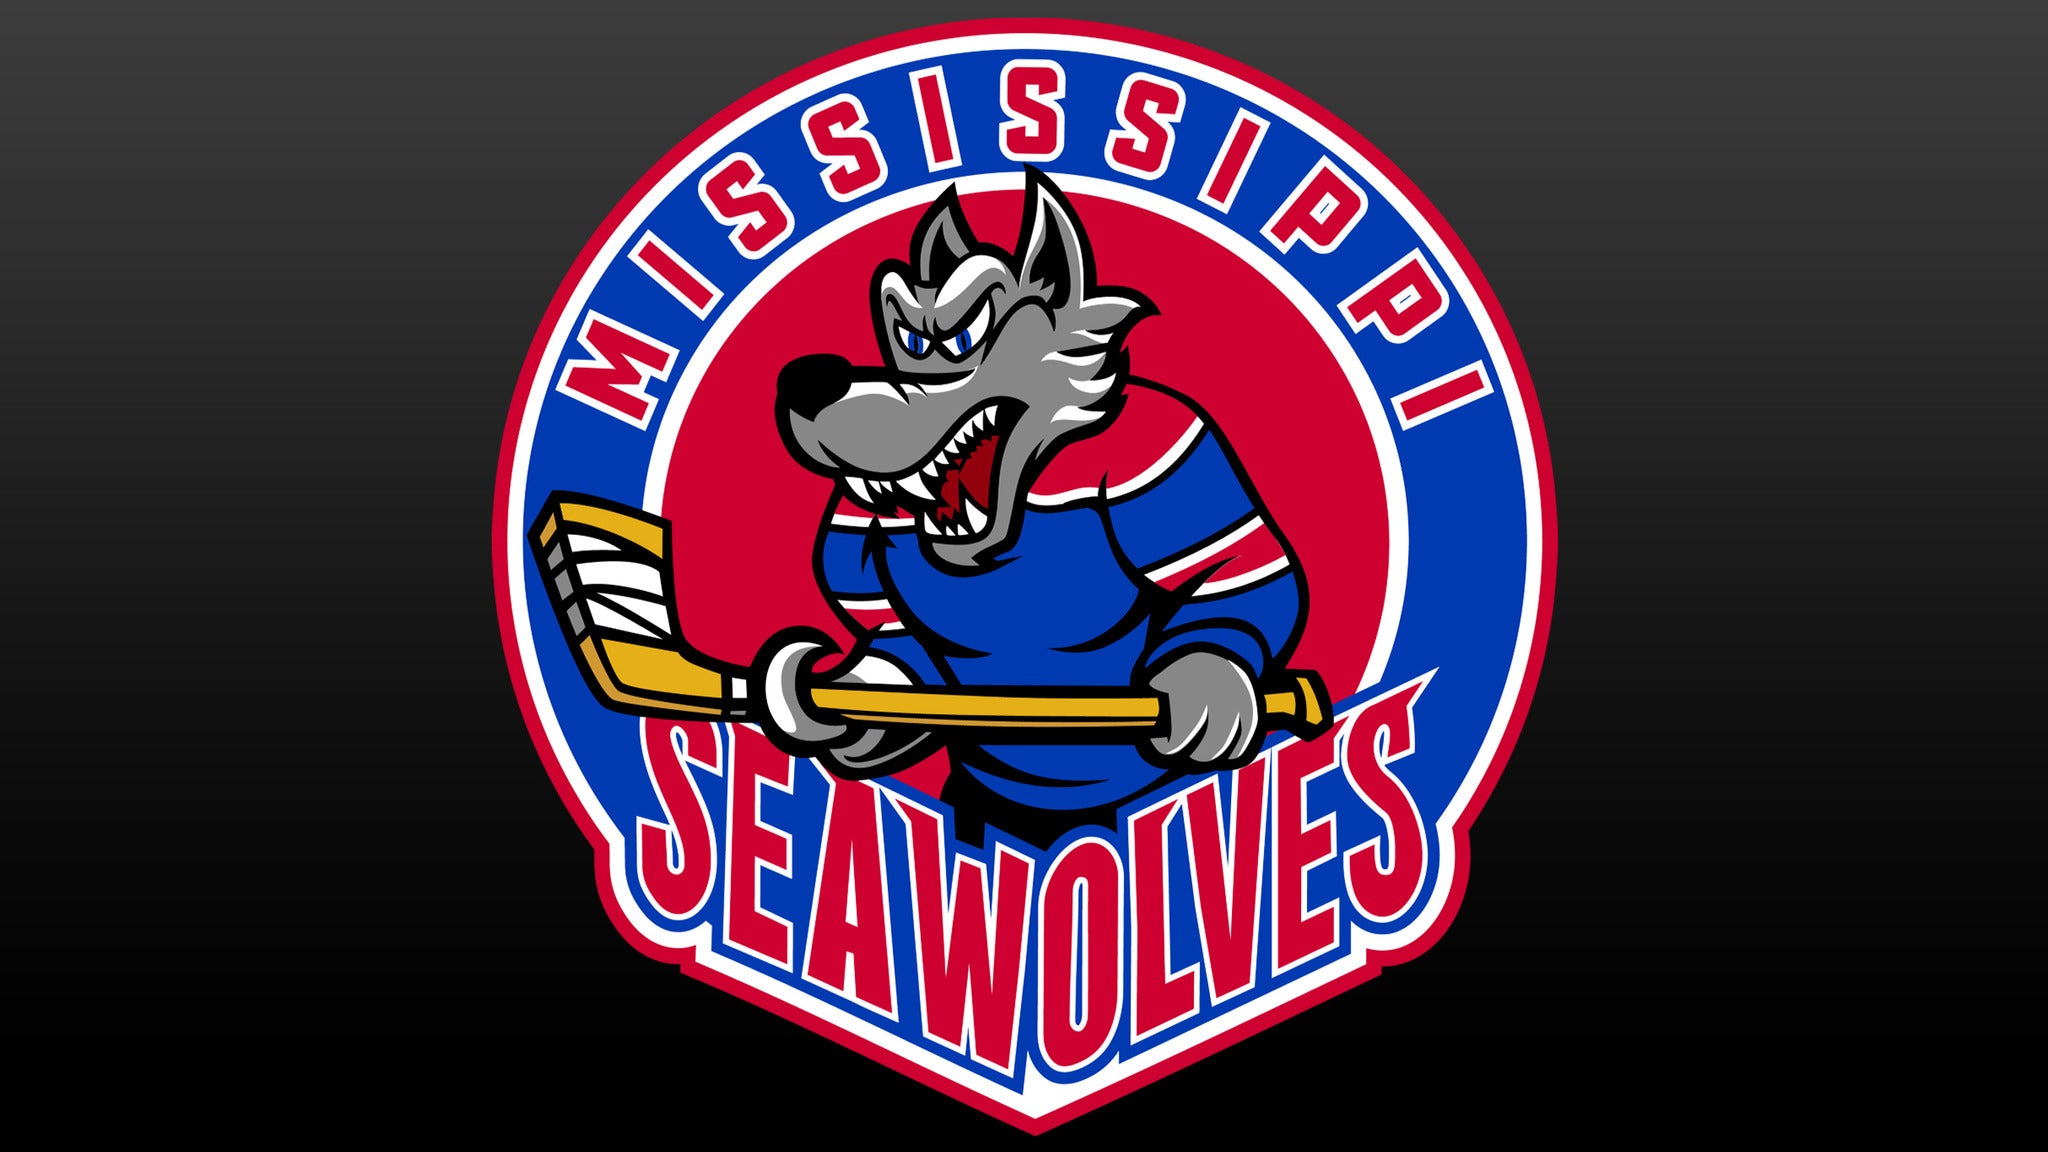 Ms wolf. Columbus River Dragons. Mississippi Sea Wolves. Морские волки эмблема команды. Columbus River Dragons g League.